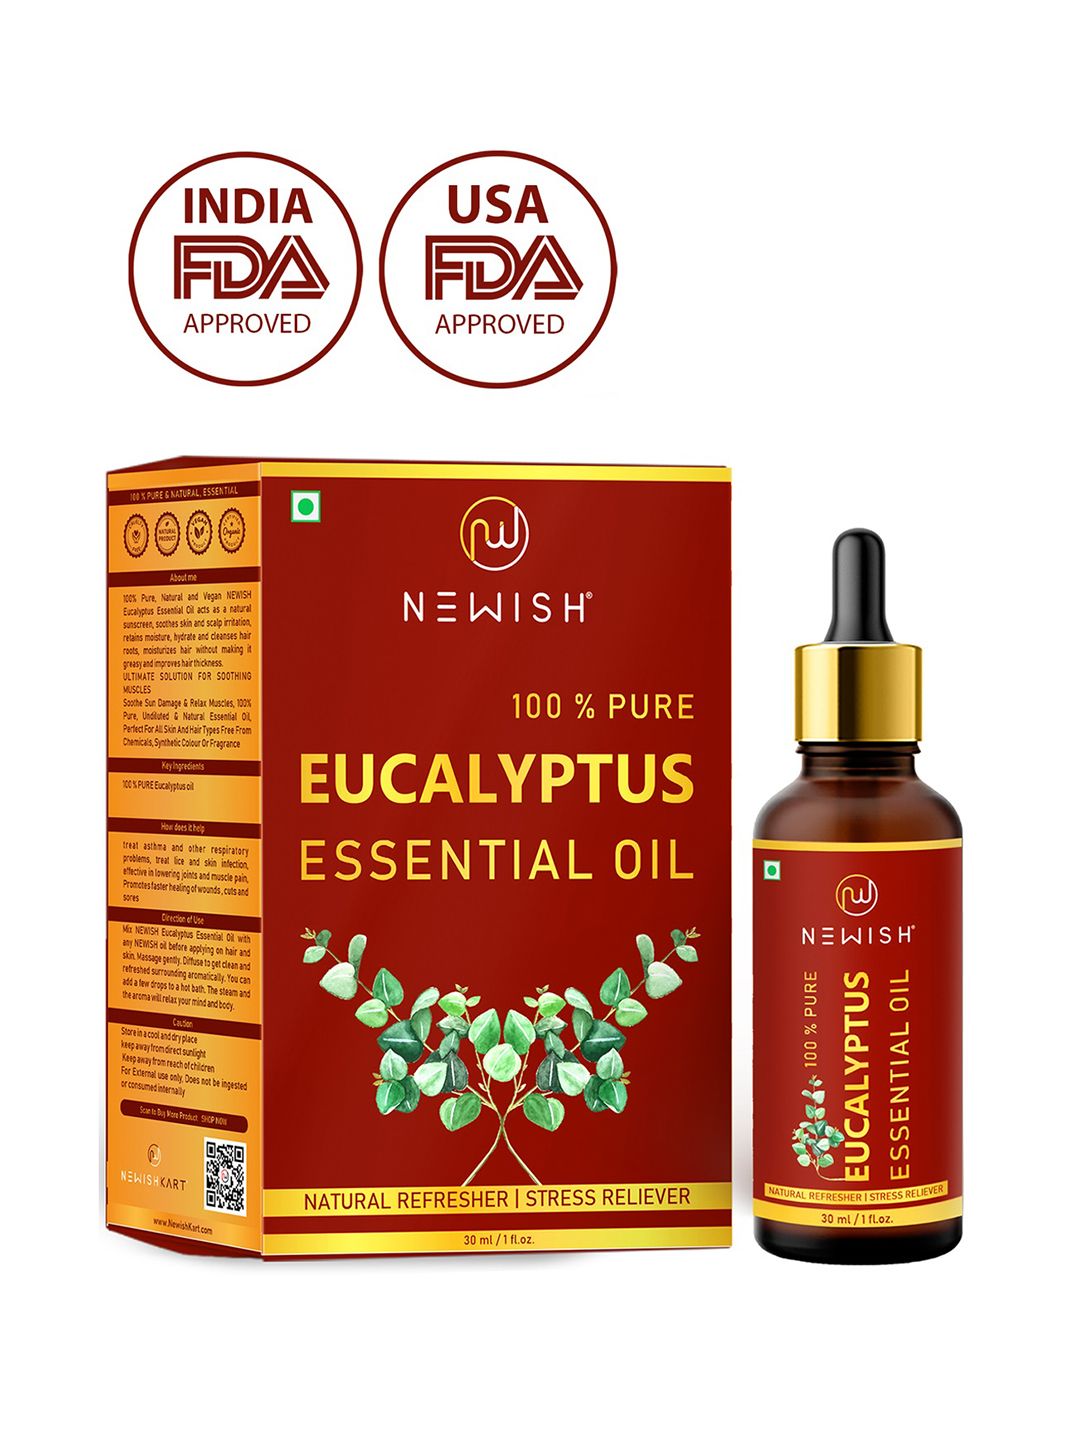 NEWISH Unisex Natural Refresher Stress Reliever Eucalyptus Aroma Oils 30ml Price in India